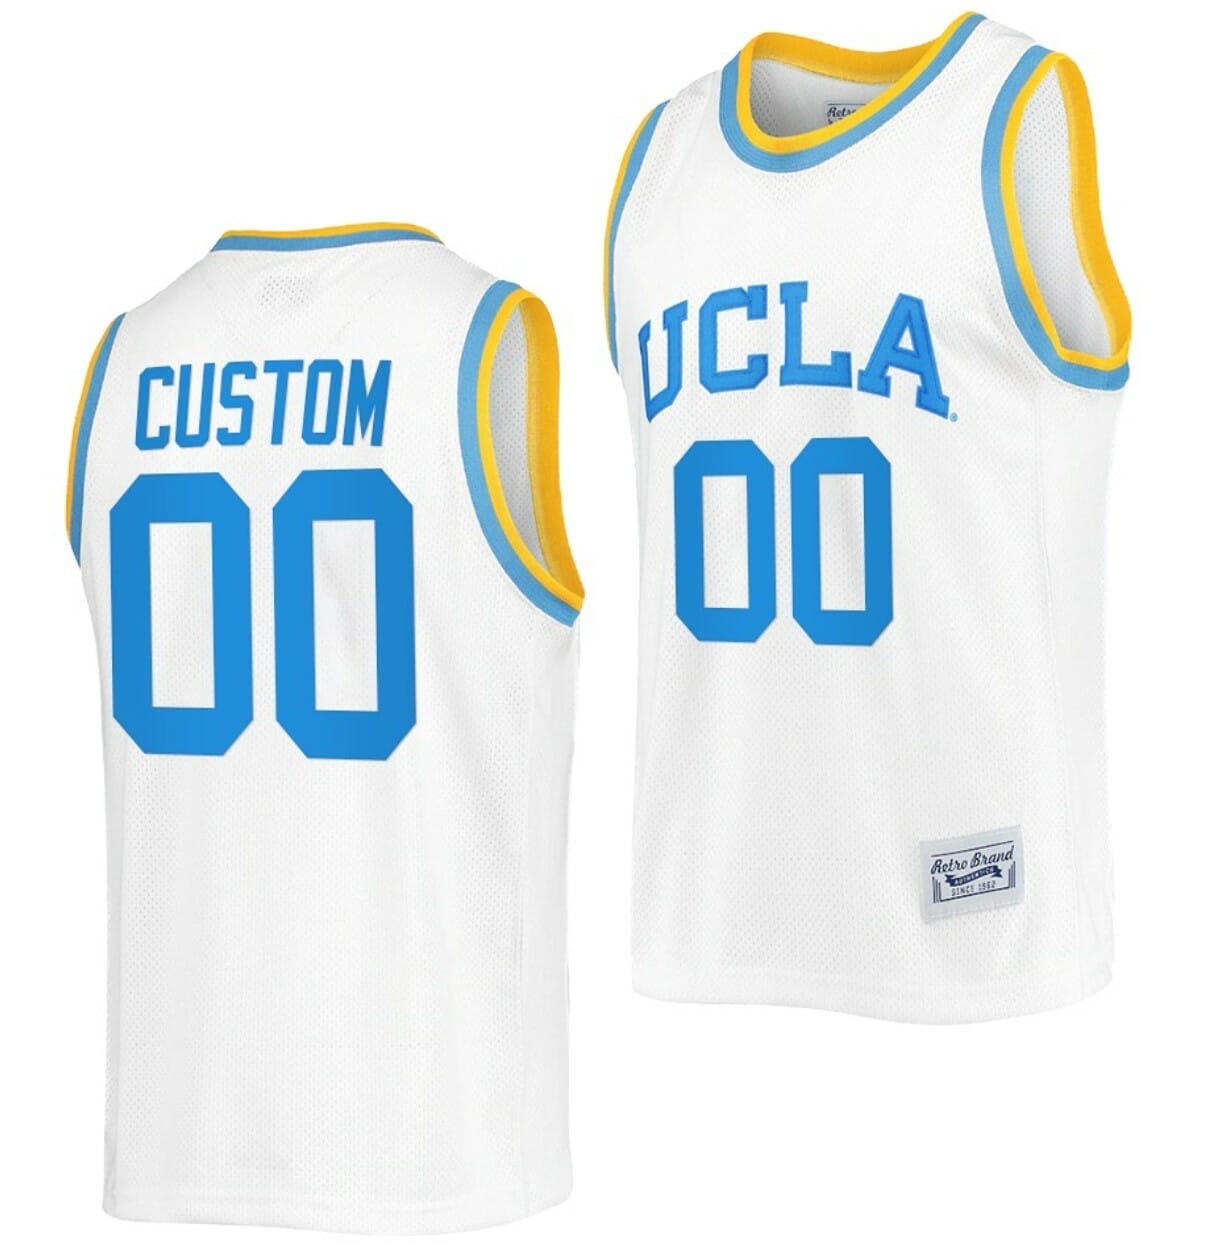 UCLA Bruins Customizable College Style Basketball Jersey